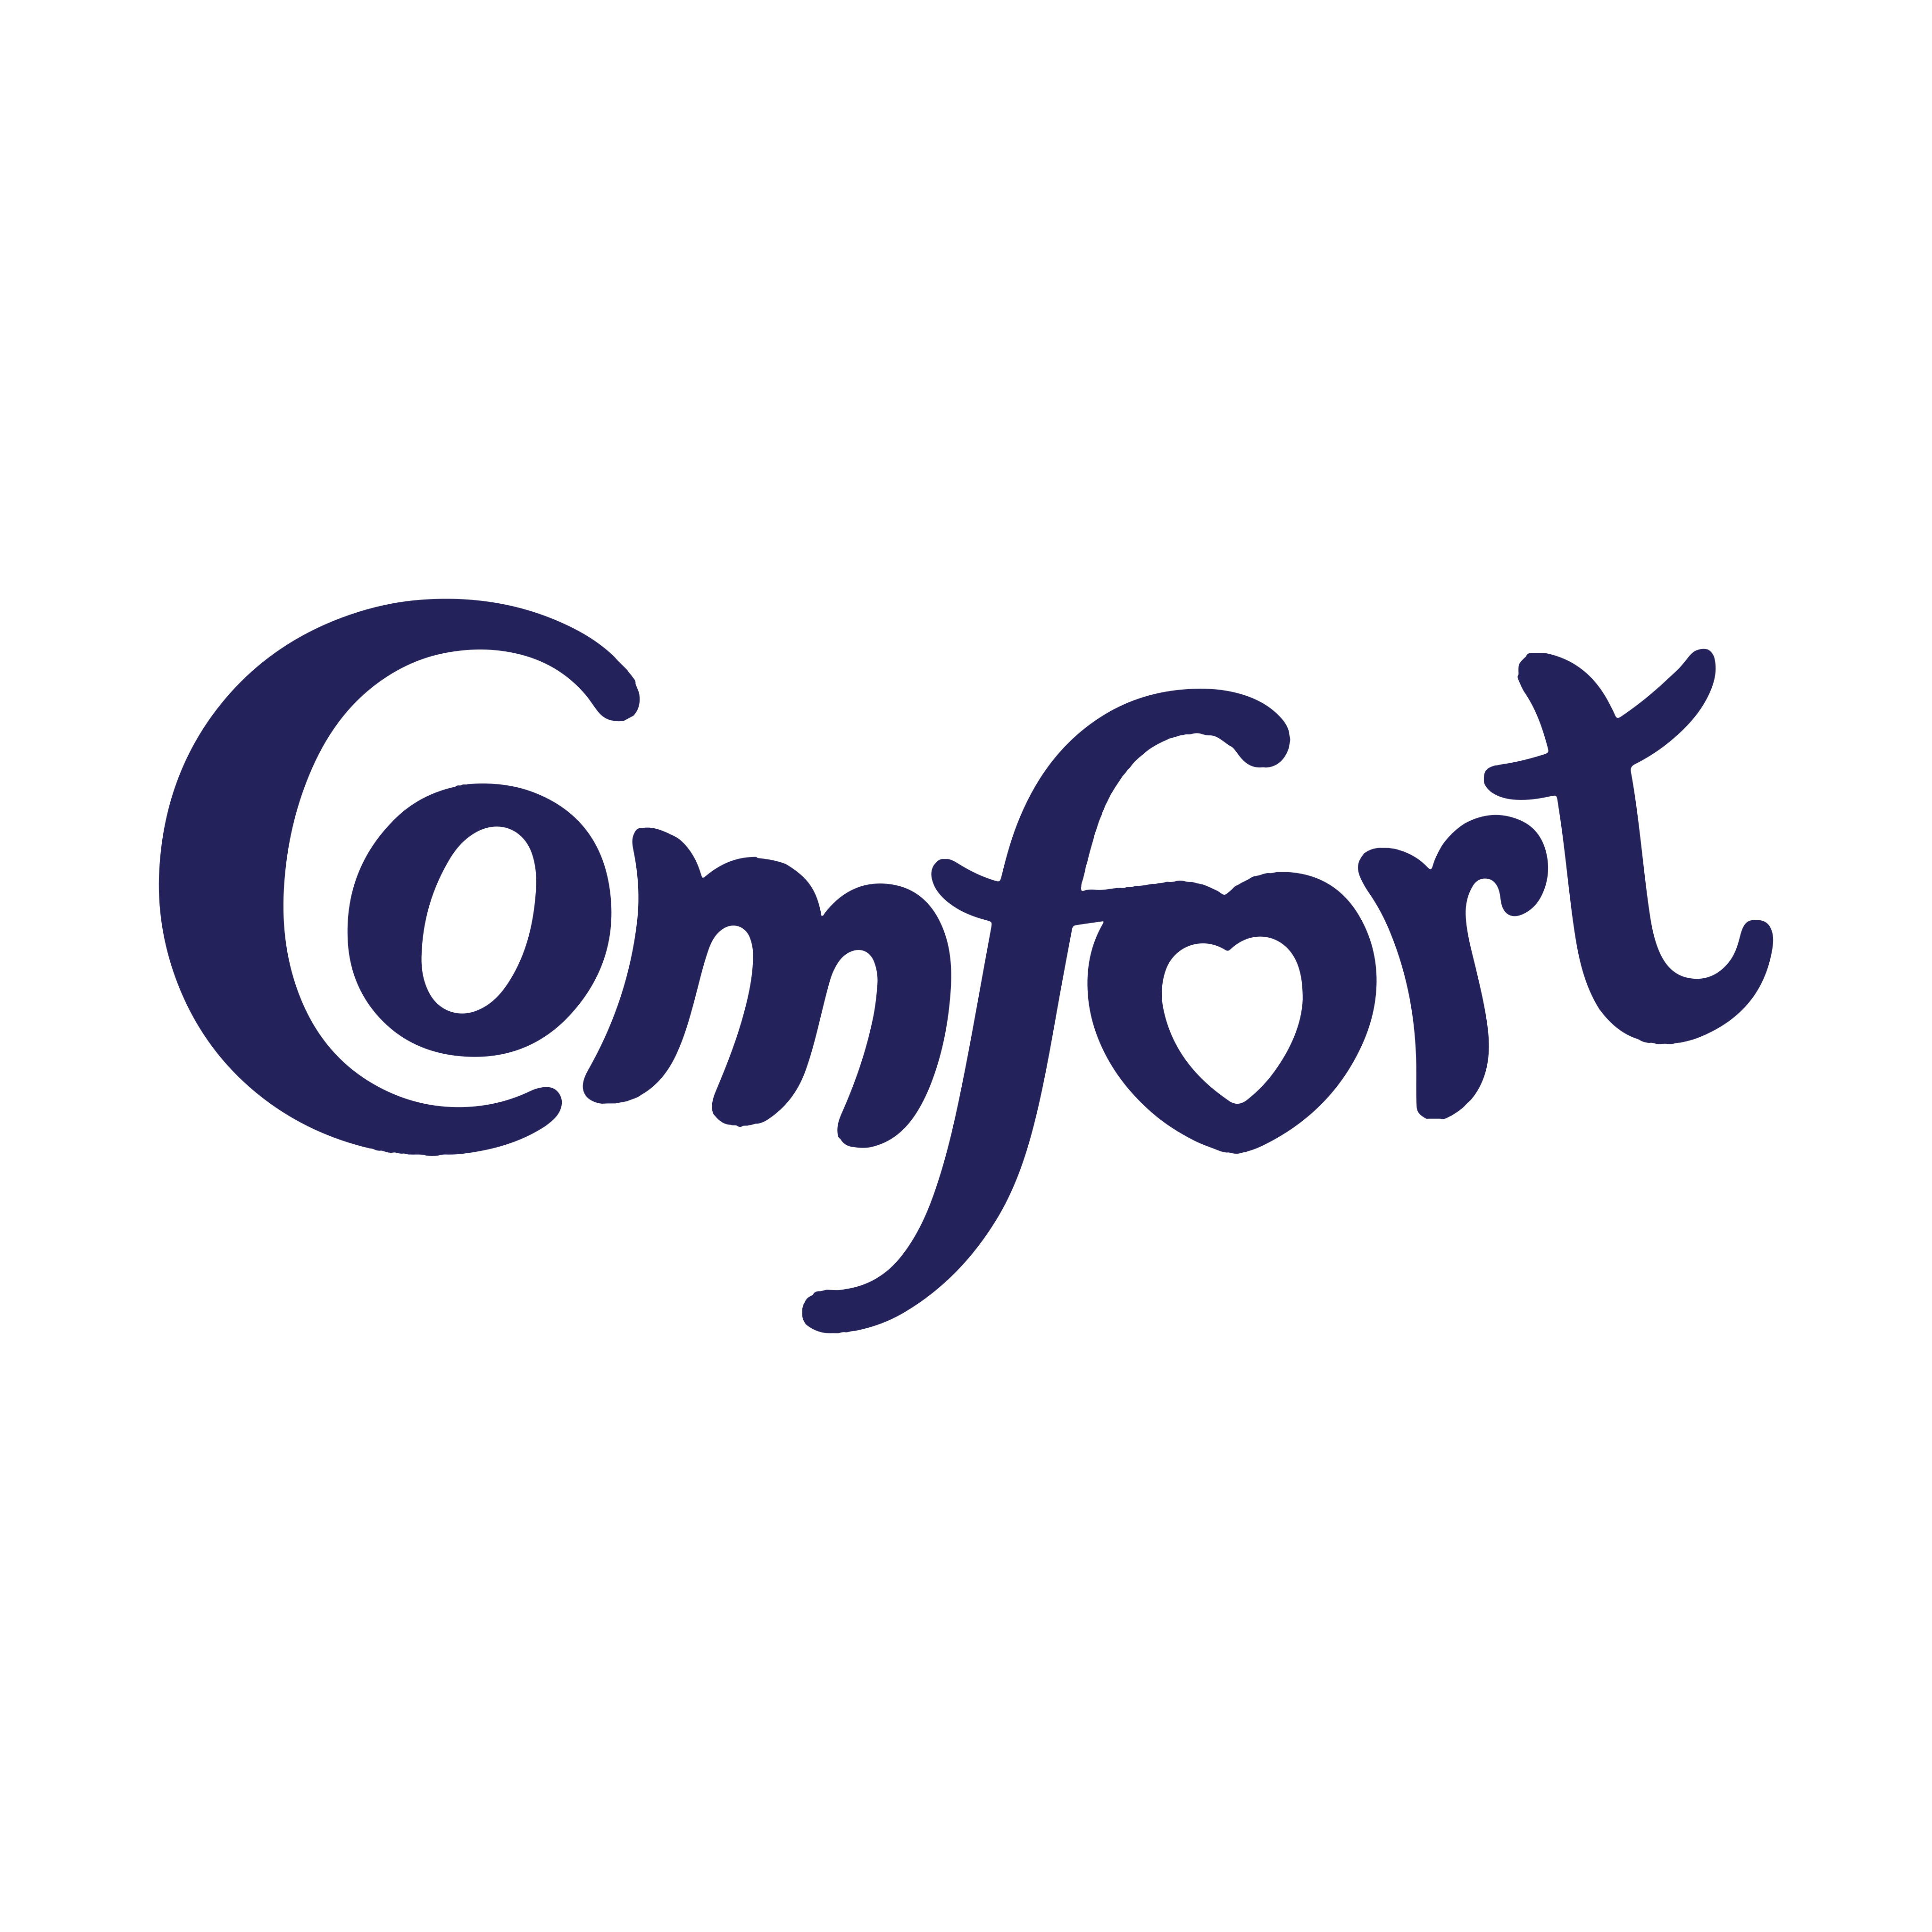 Comfort Logo PNG.